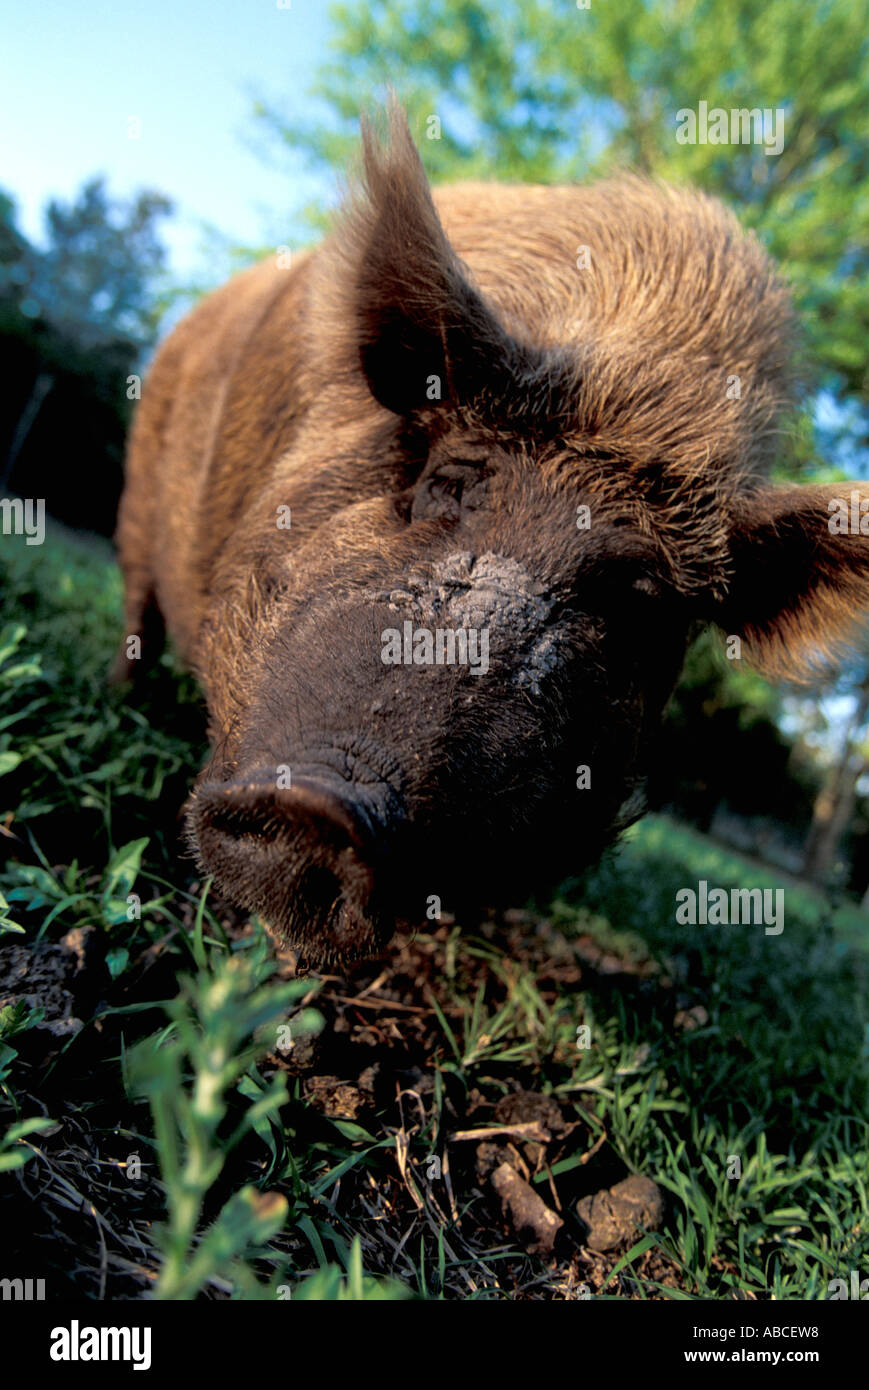 Florida hog wild animal razorback Piney Woods rooter closeup muso naso ritratto grande creatura intimidatorio Foto Stock